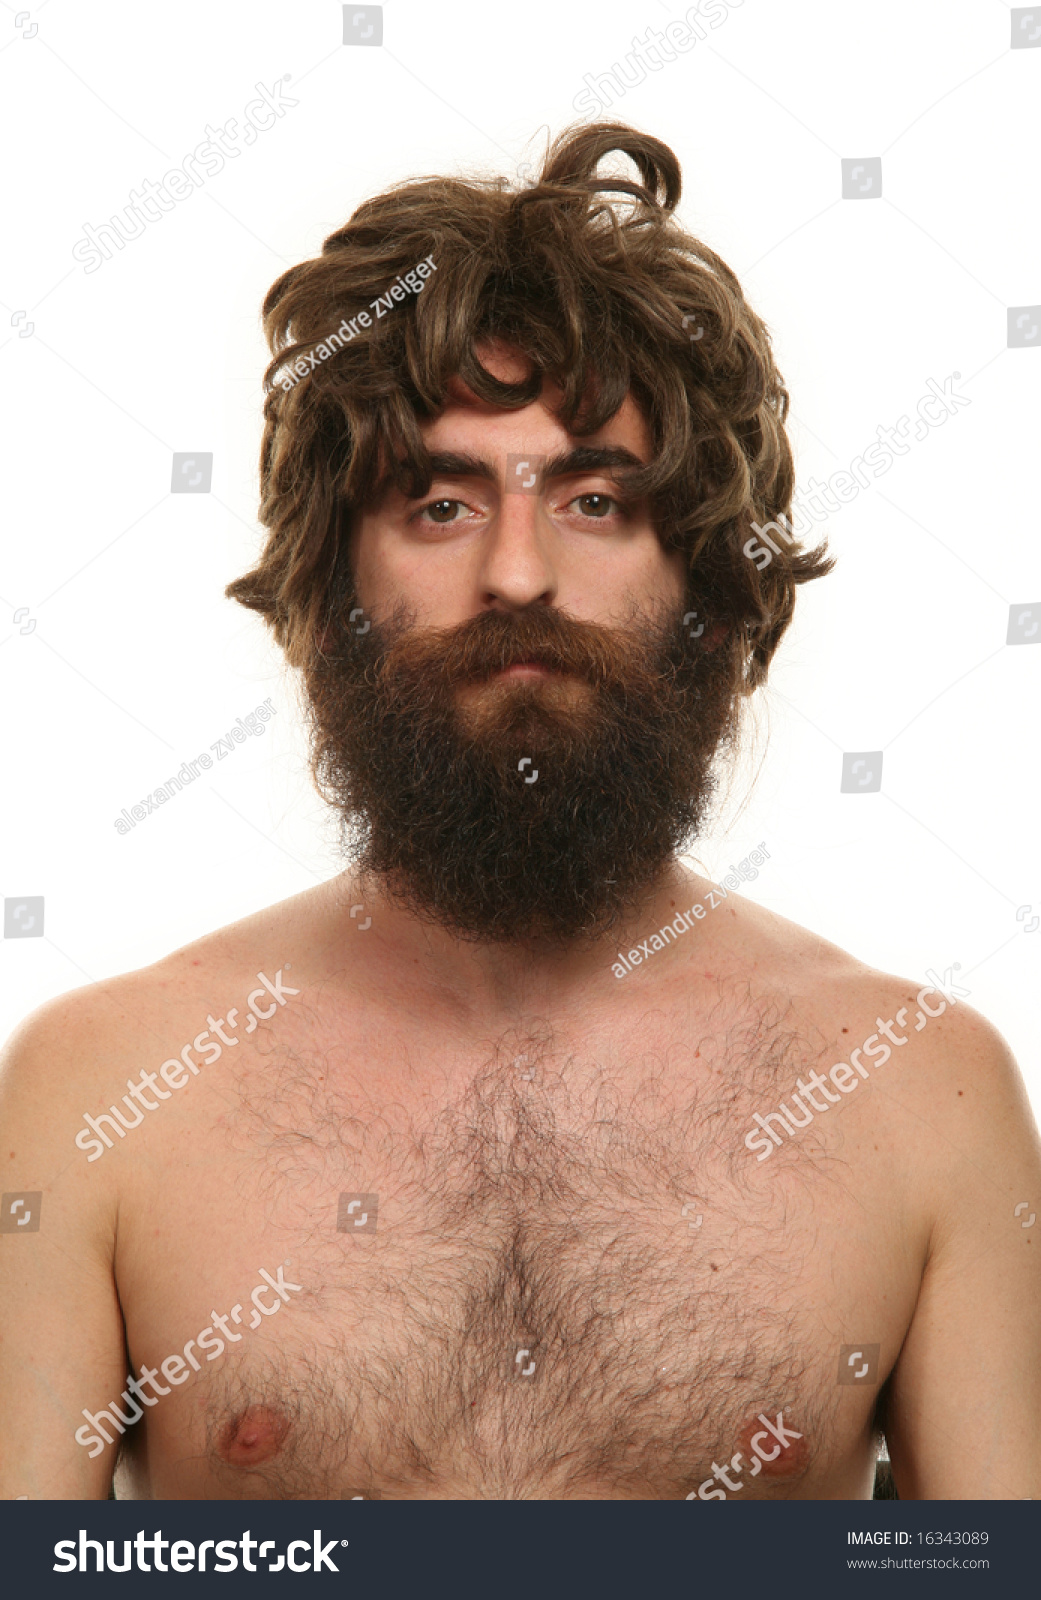 стрижка волос на груди у мужчин фото 54